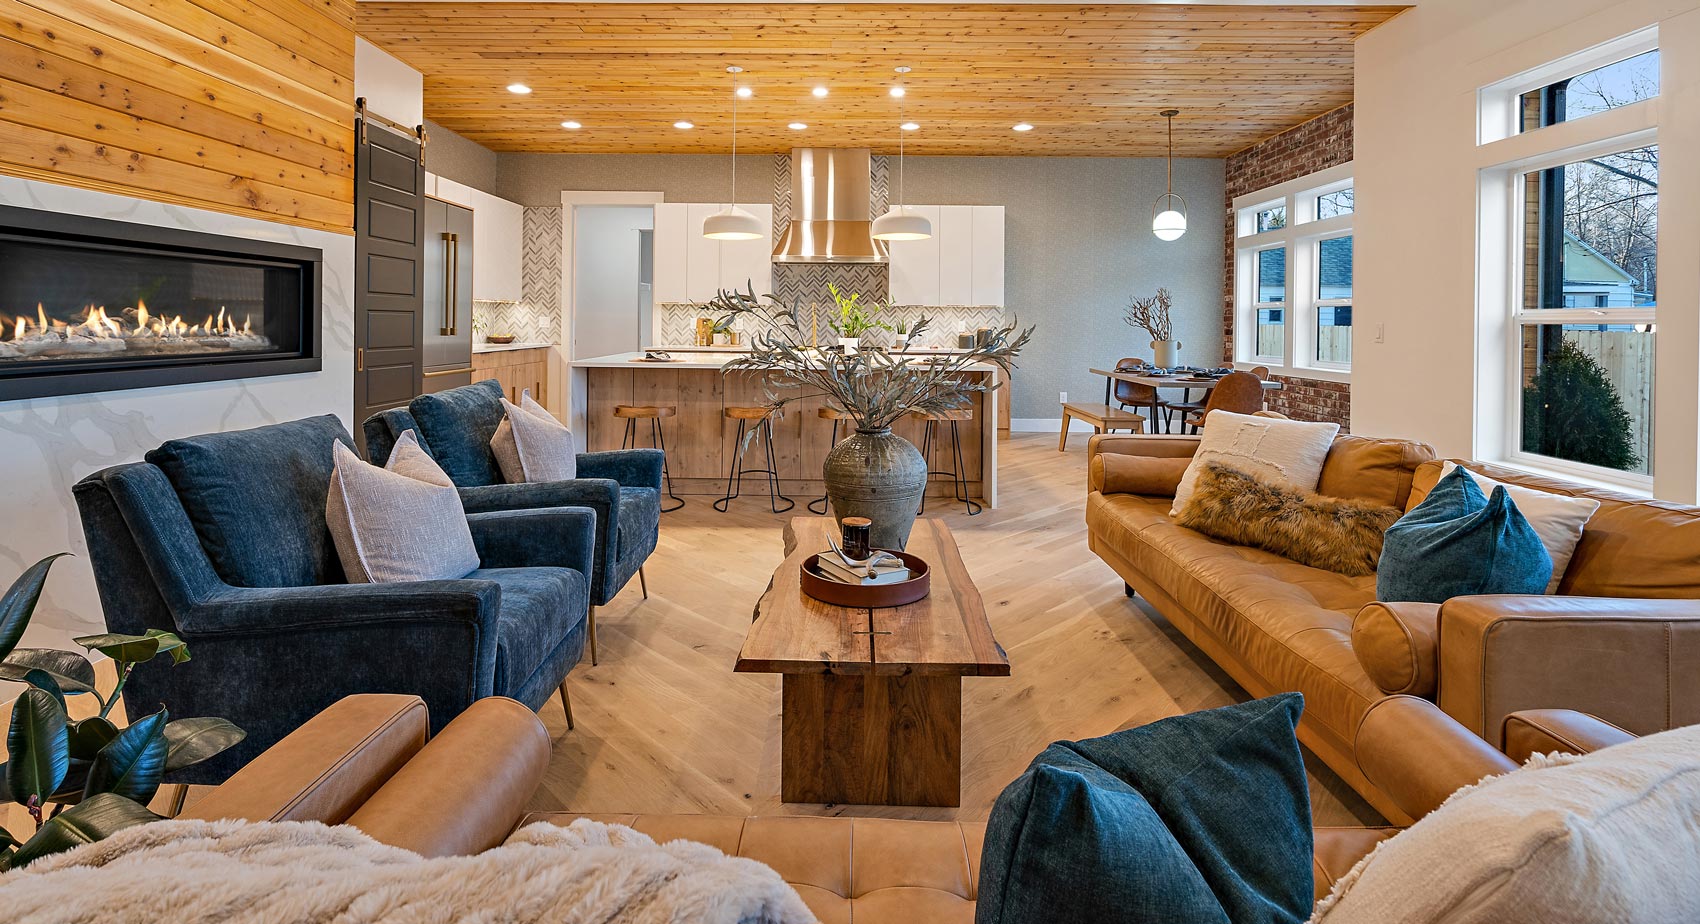 Cozy Living Room With Warm Tones